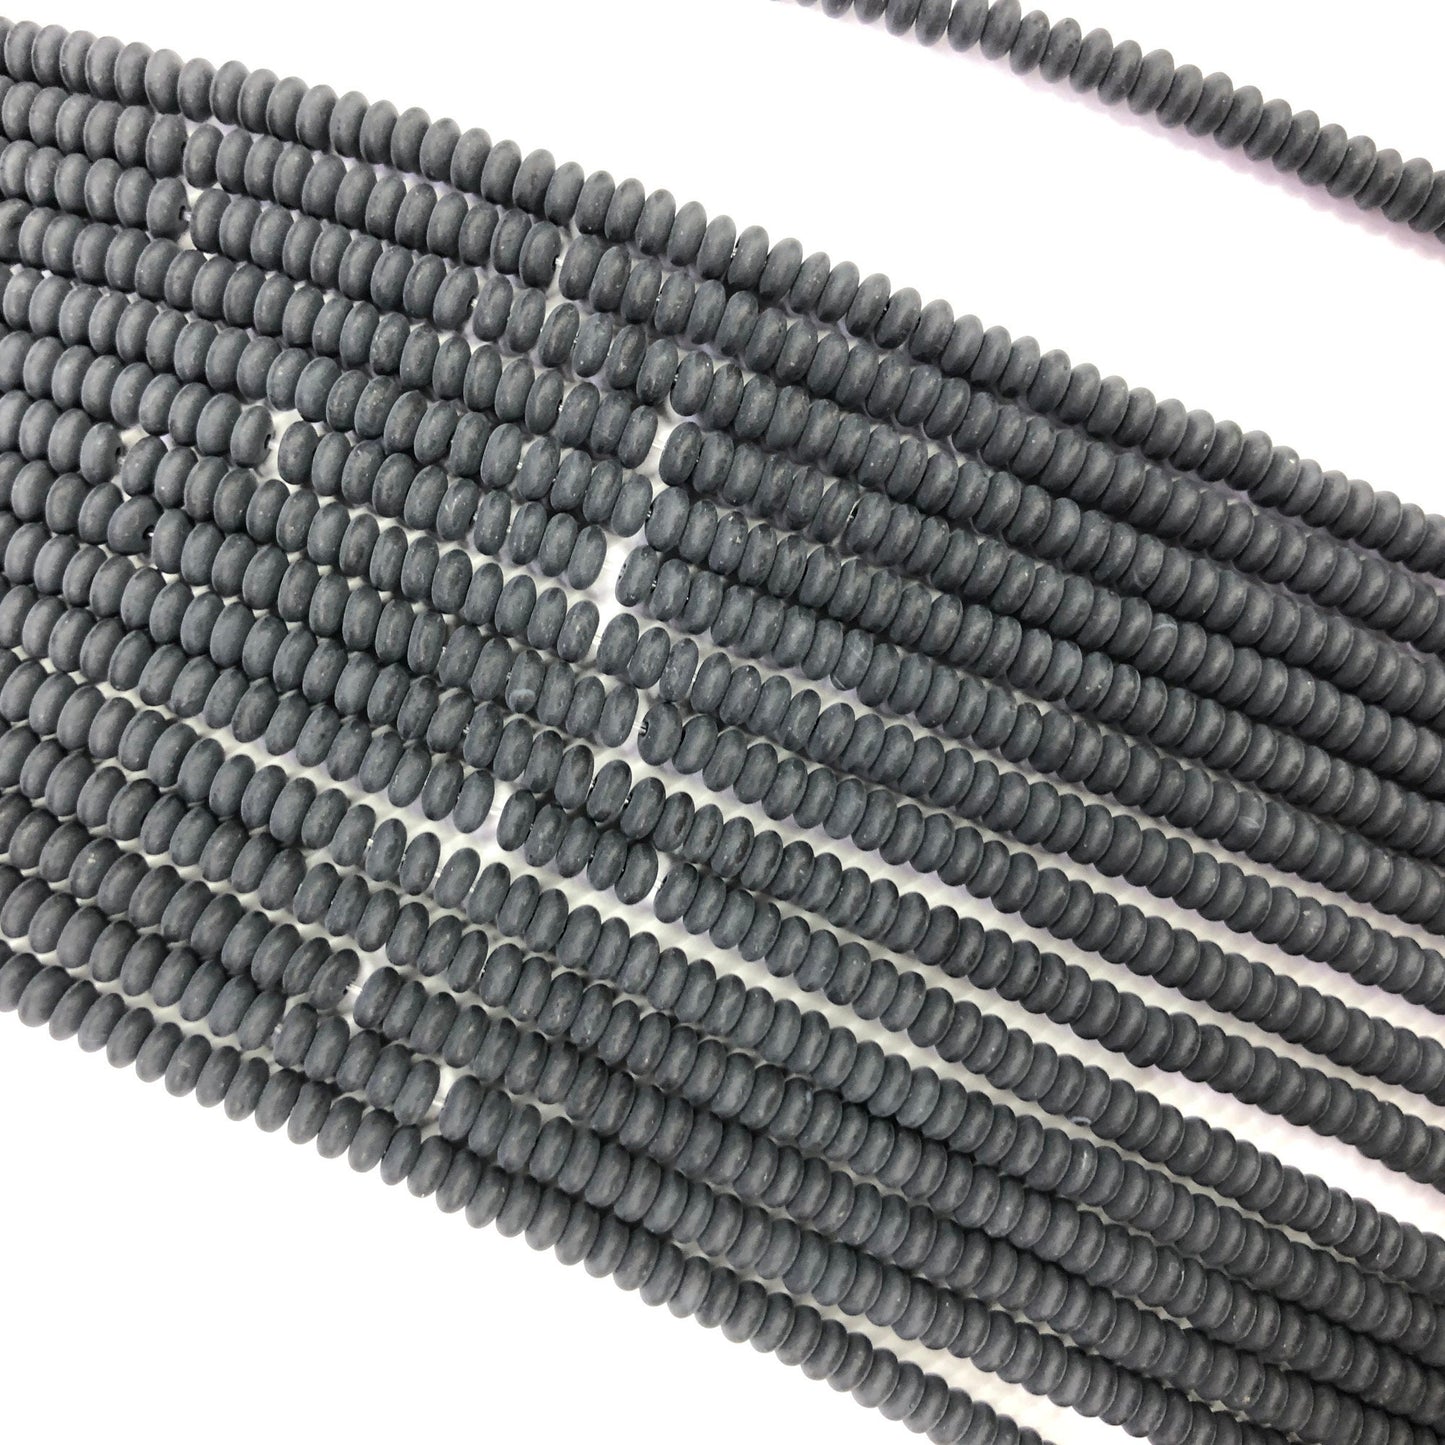 Black Onyx Rondelle Matte Beads Natural Gemstone Beads 2x4mm 15''